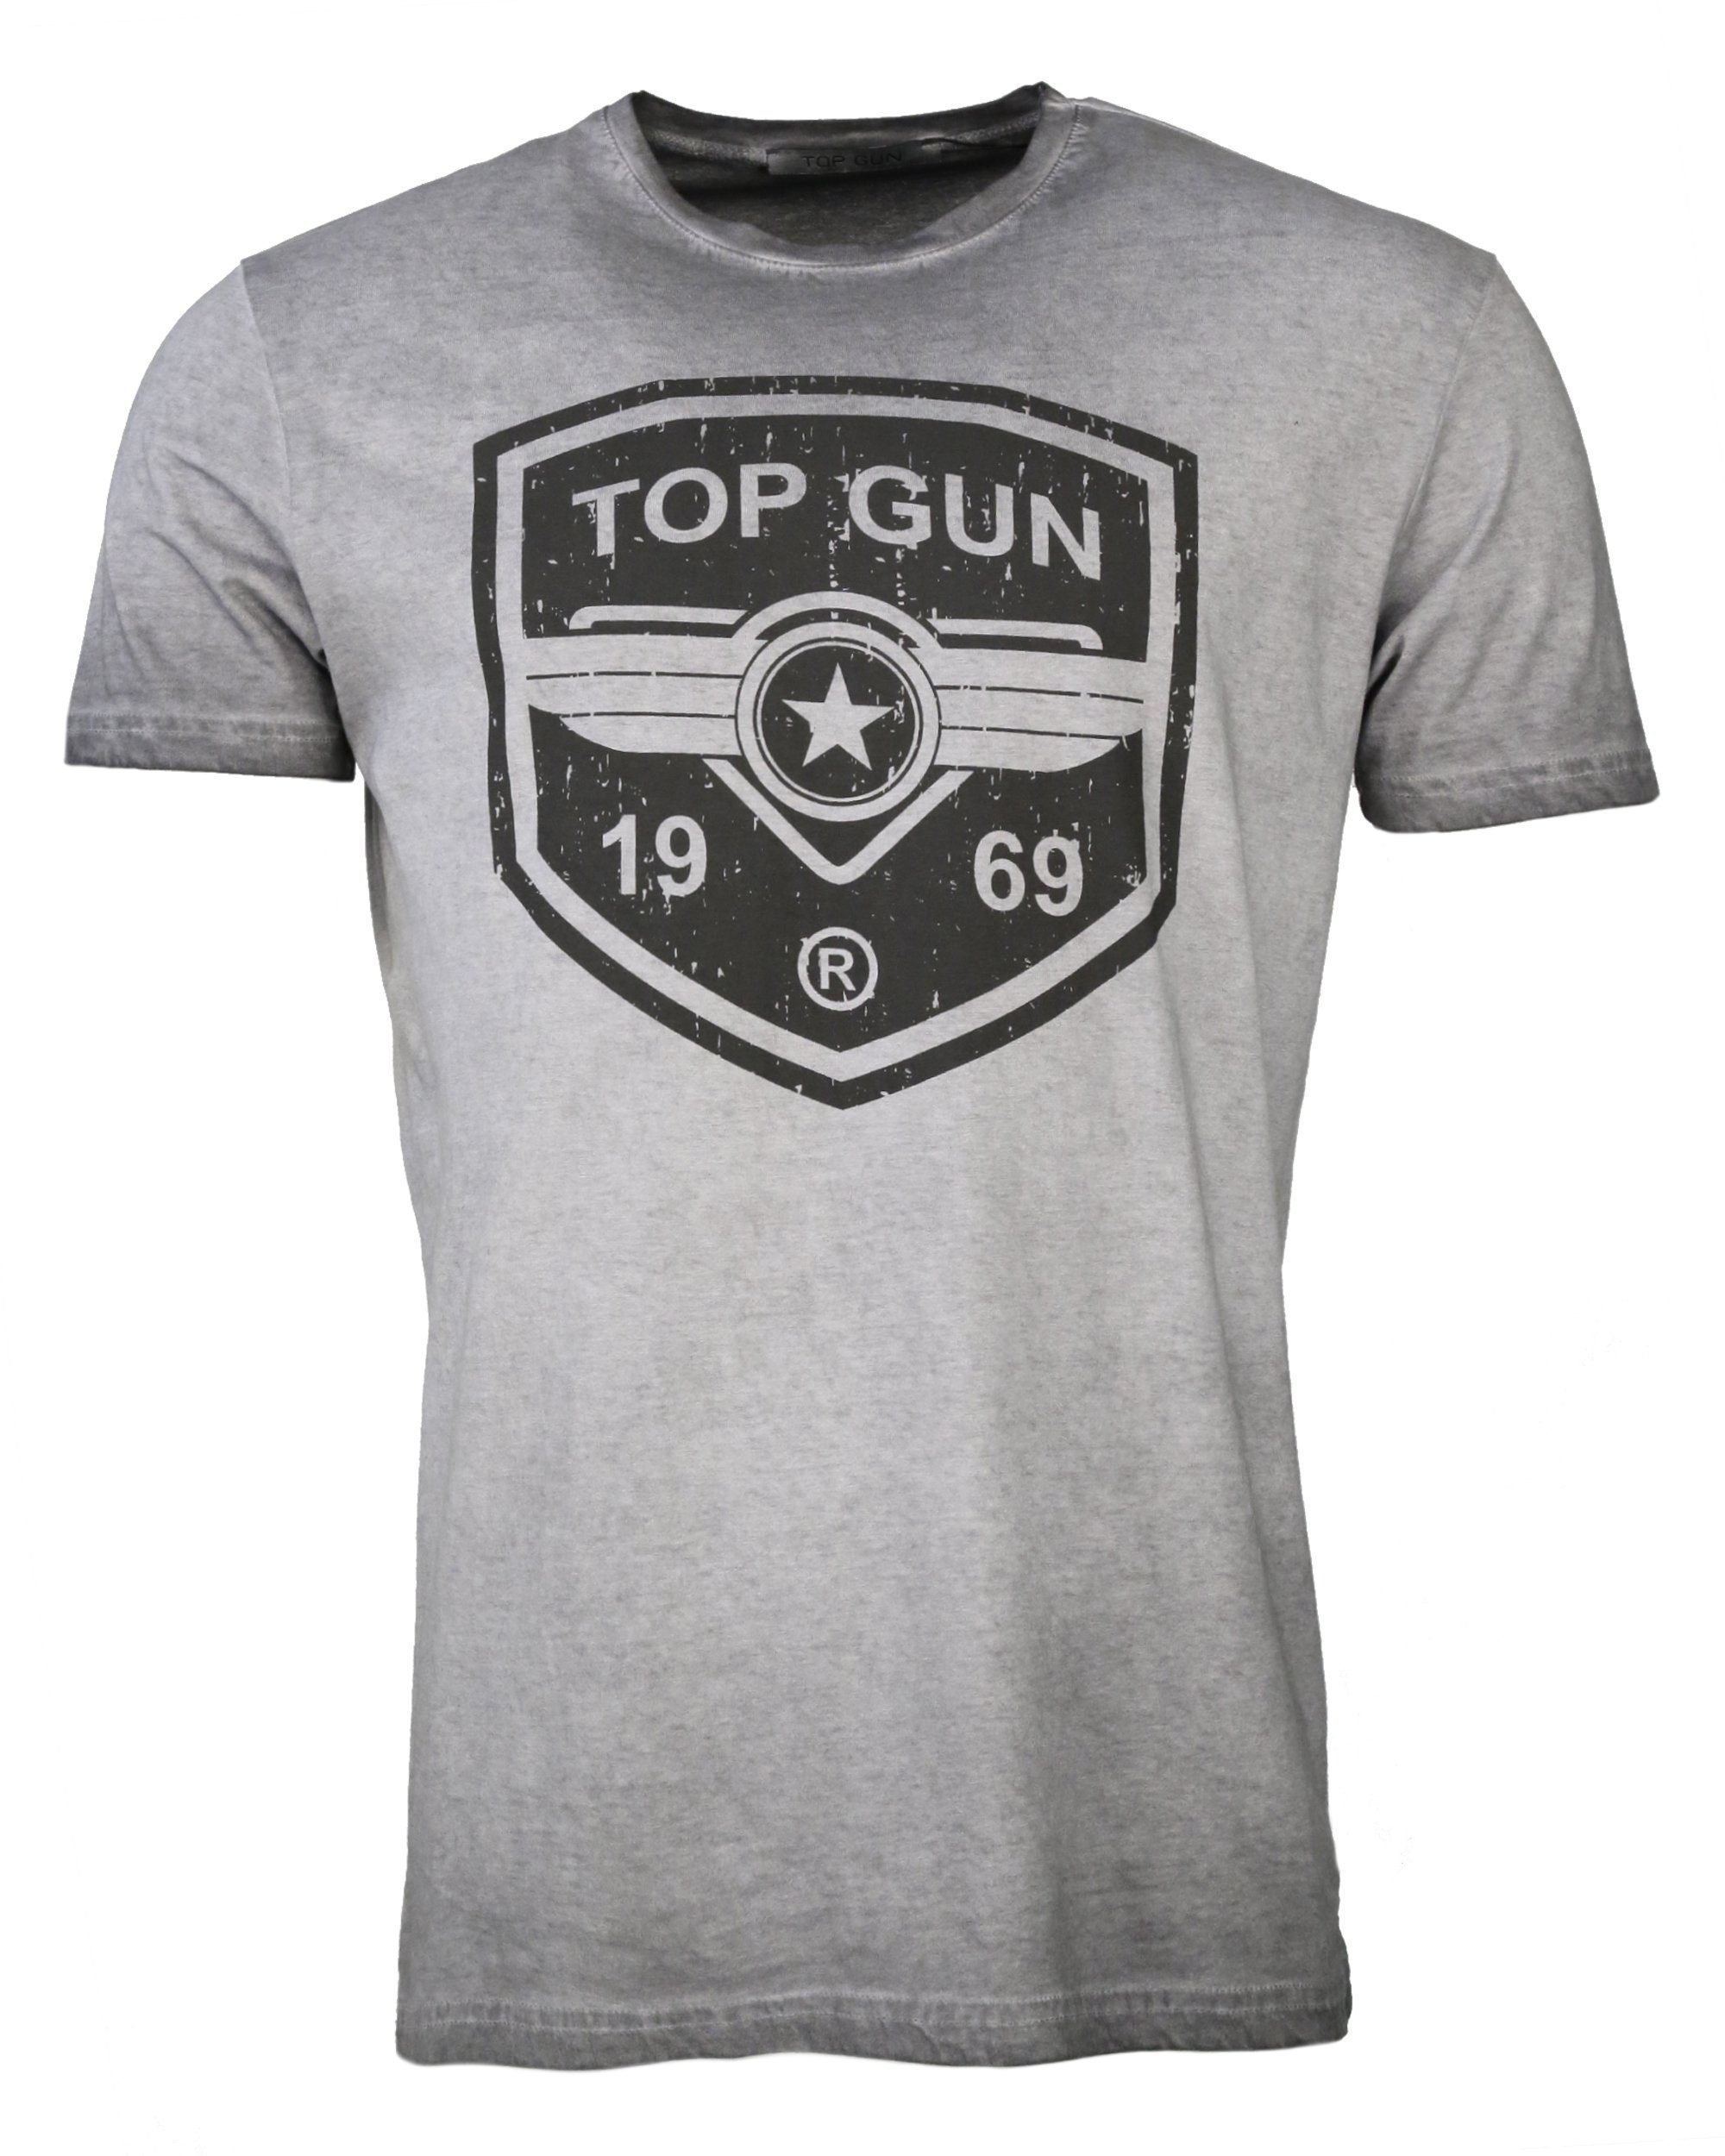 TOP GUN T-Shirt Powerful TG20191043 grey